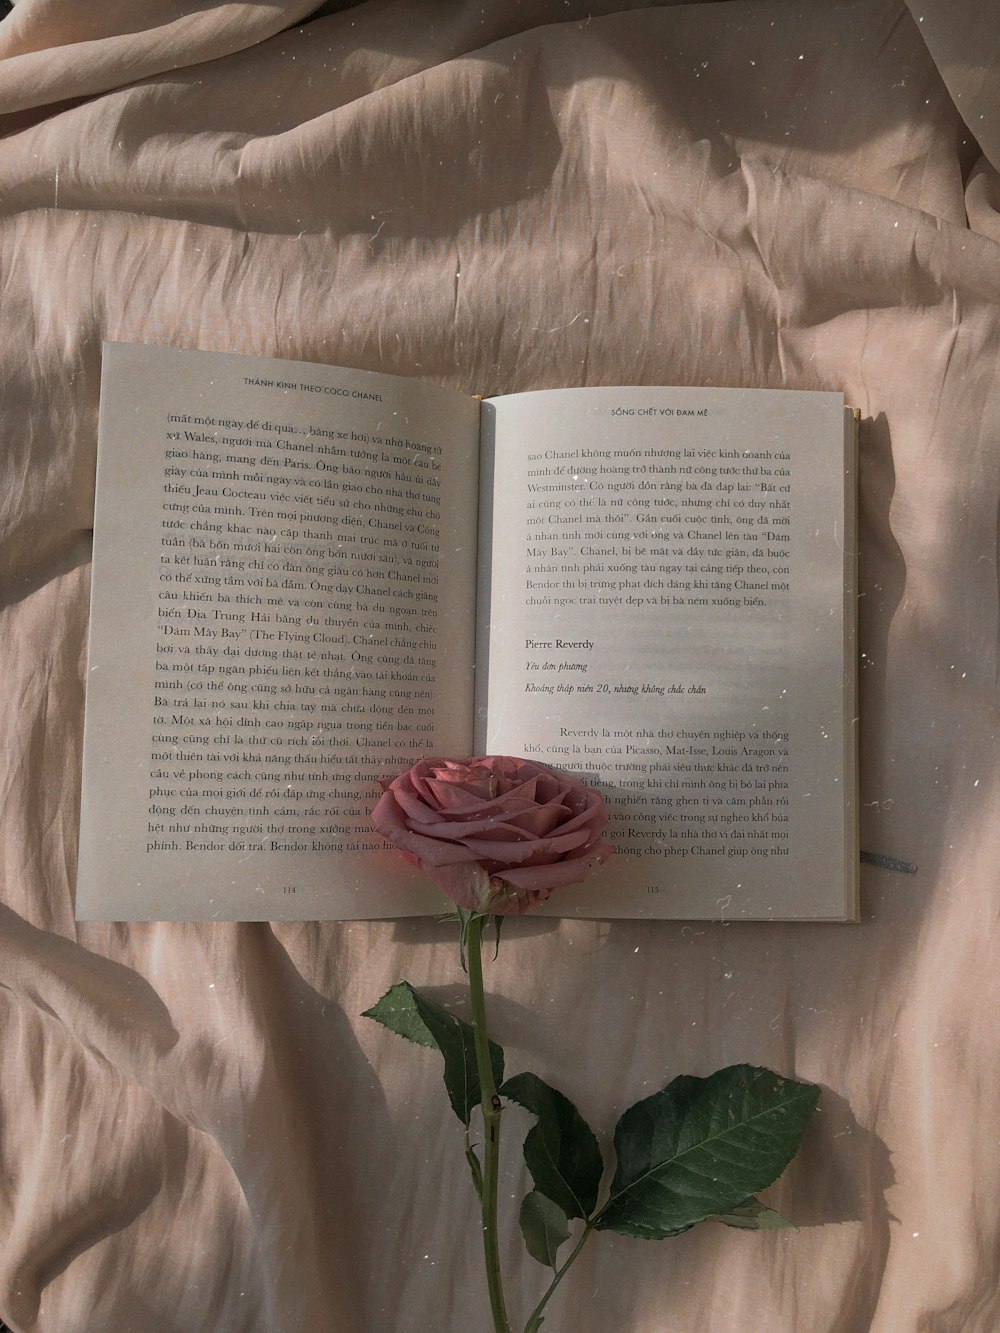 Rosa rosa no livro aberto